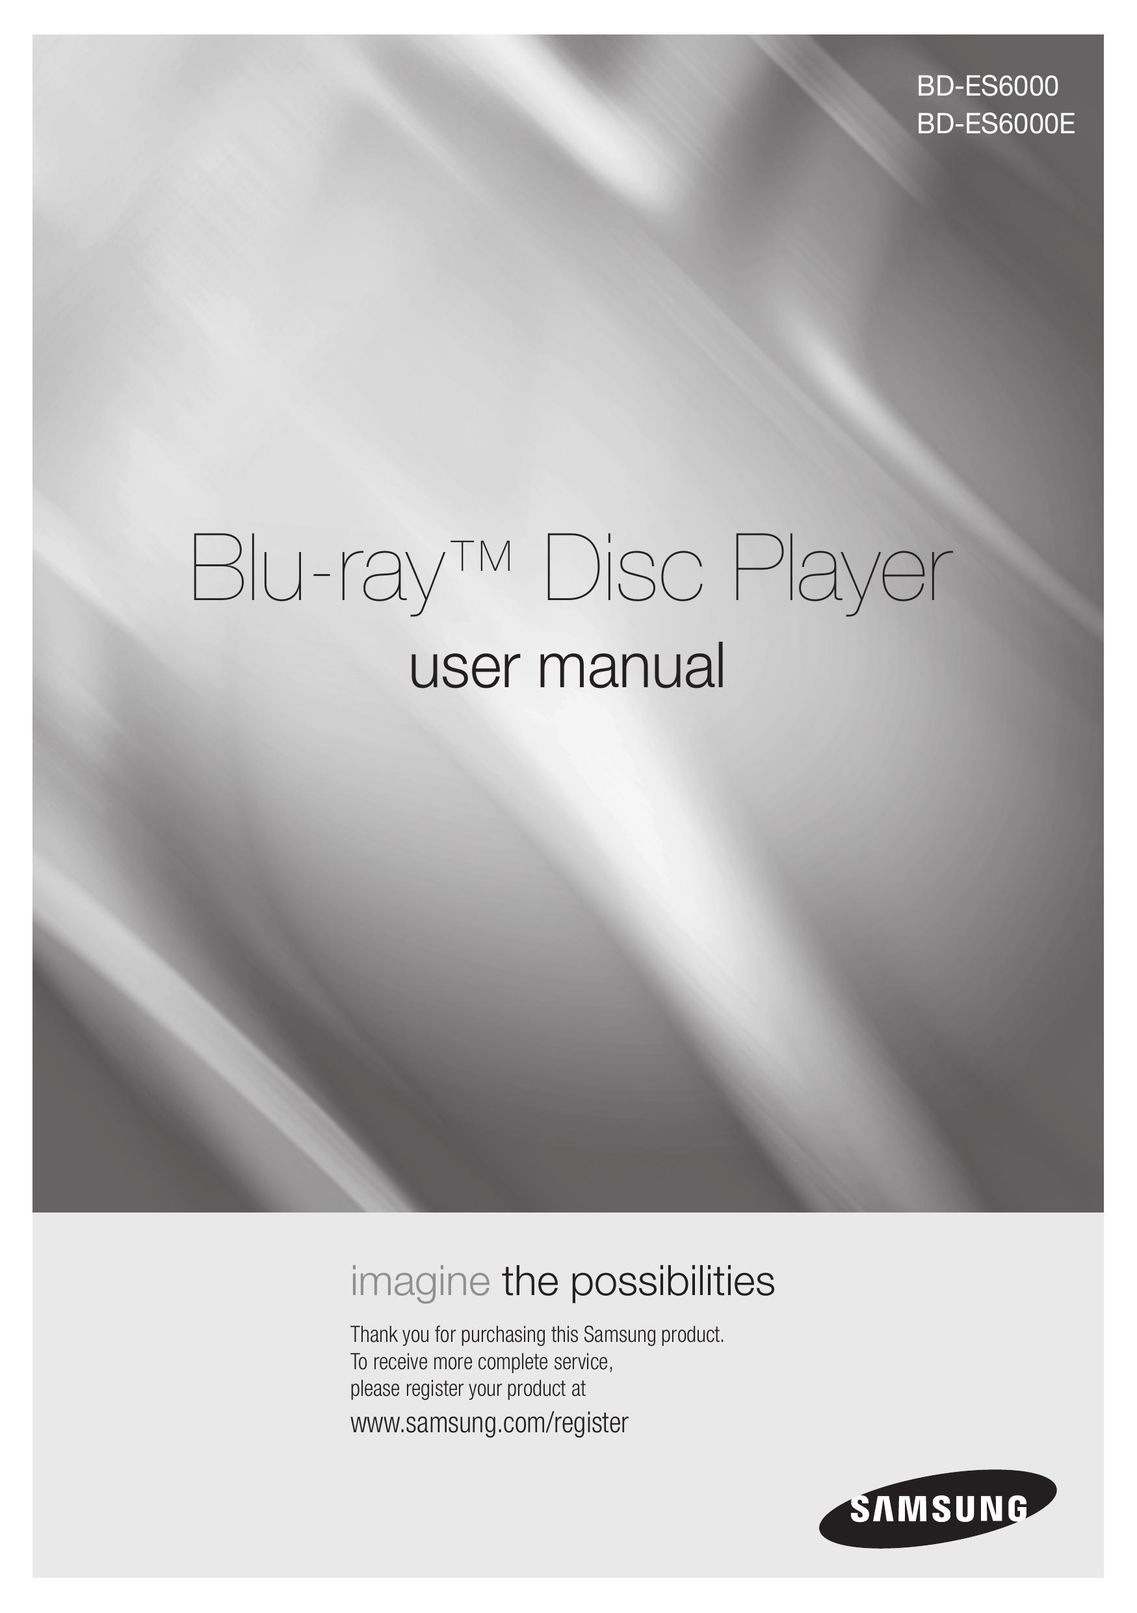 Samsung BD-ES6000 Blu-ray Player User Manual